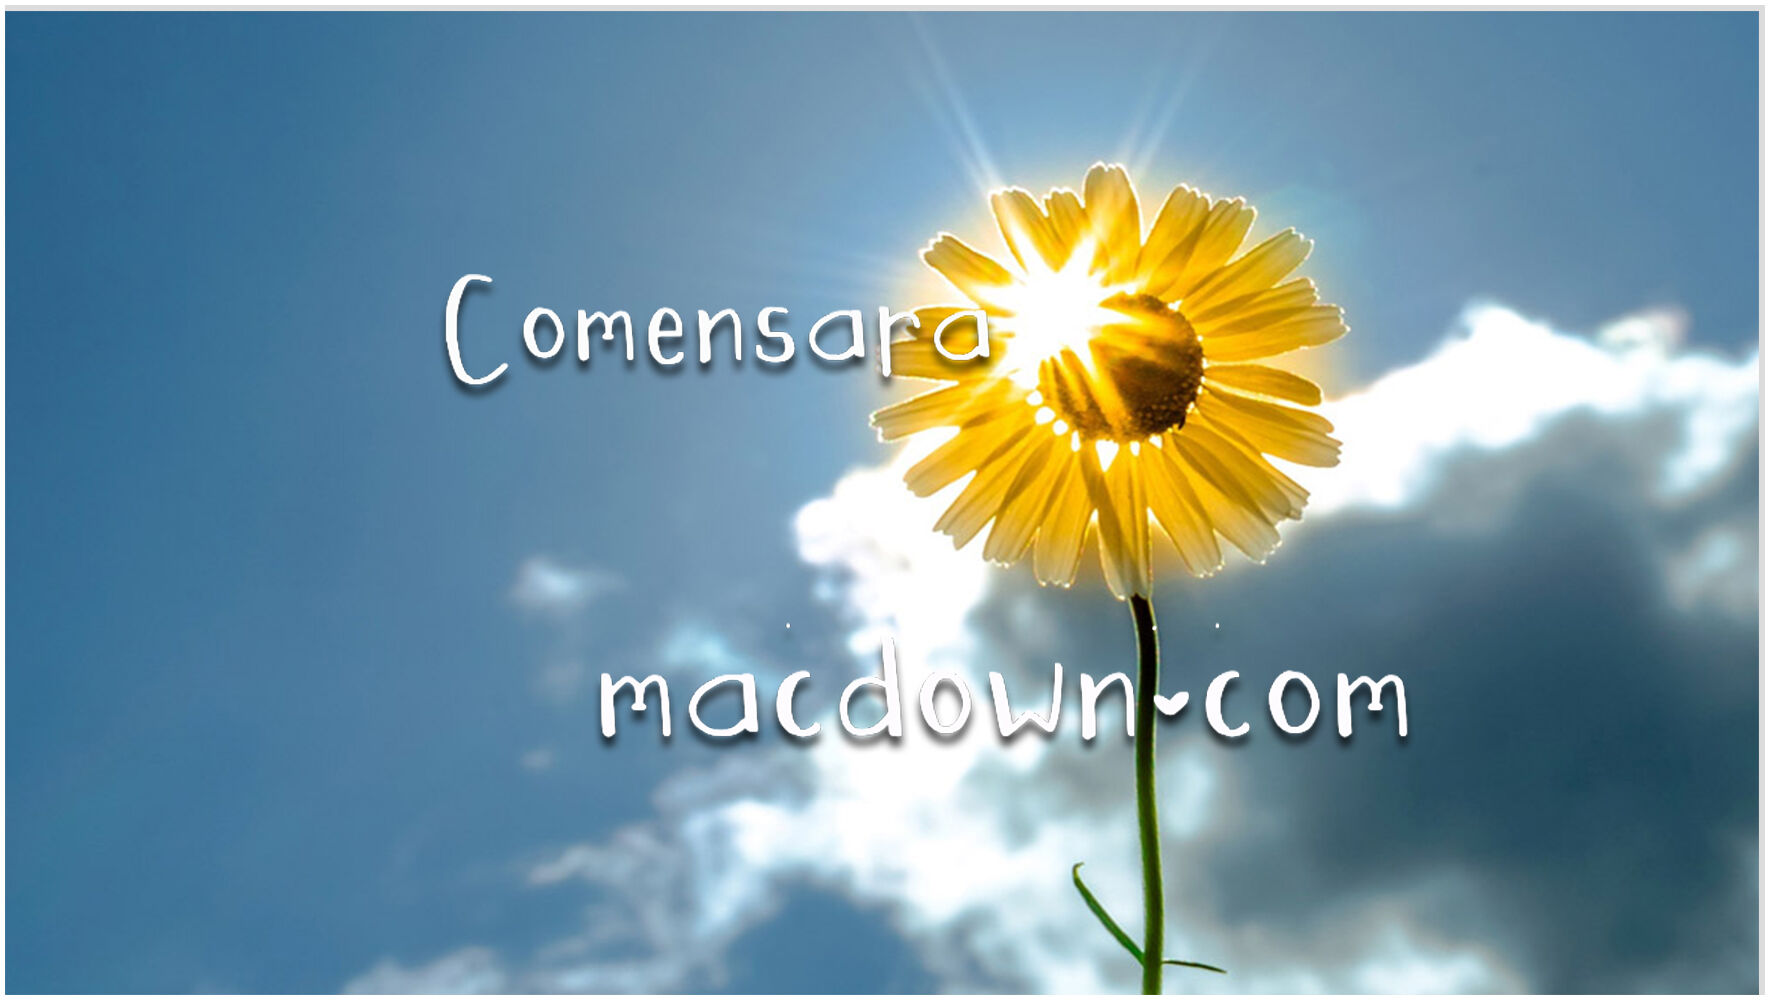 Comensara创意手绘字体 for mac